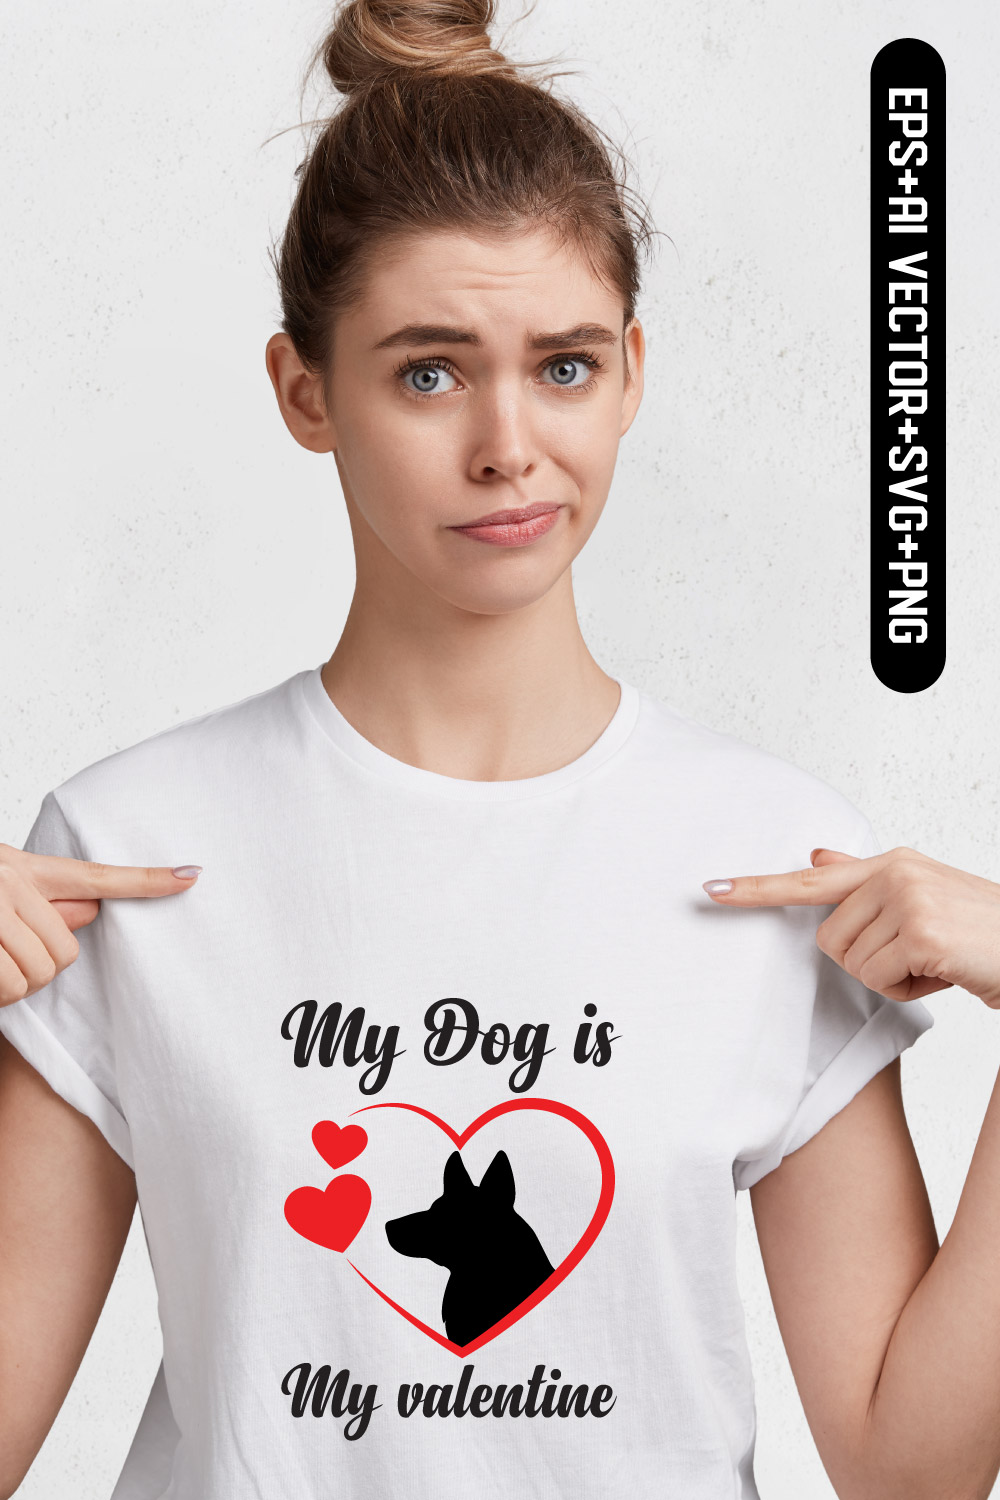 My Dog is my Valentine T-shirt Design pinterest image.